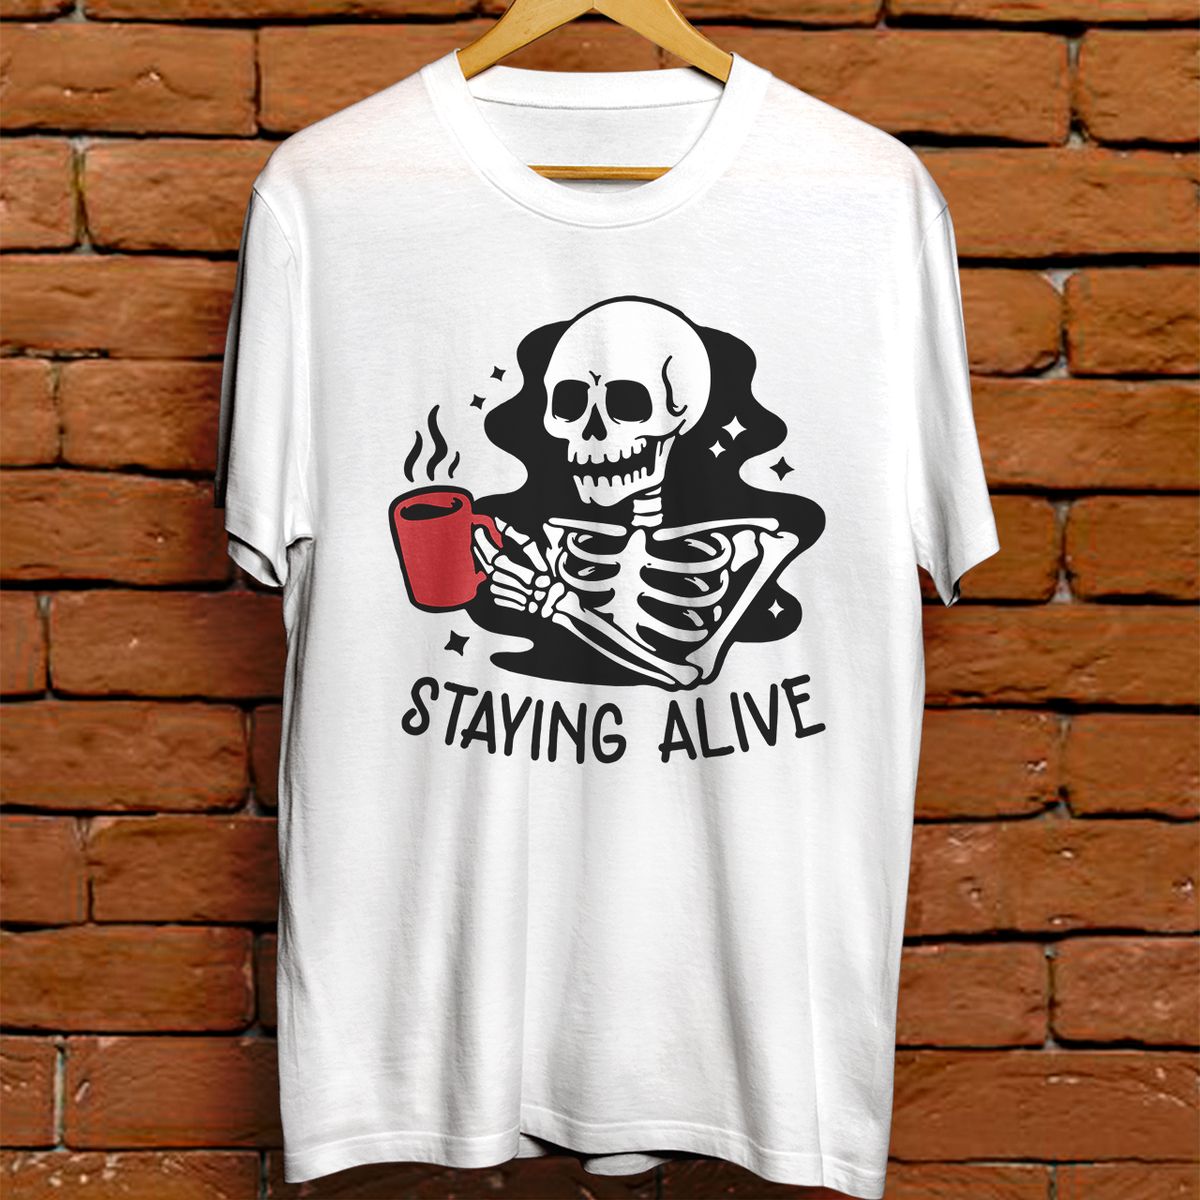 Nome do produto: Camiseta - Staying alive